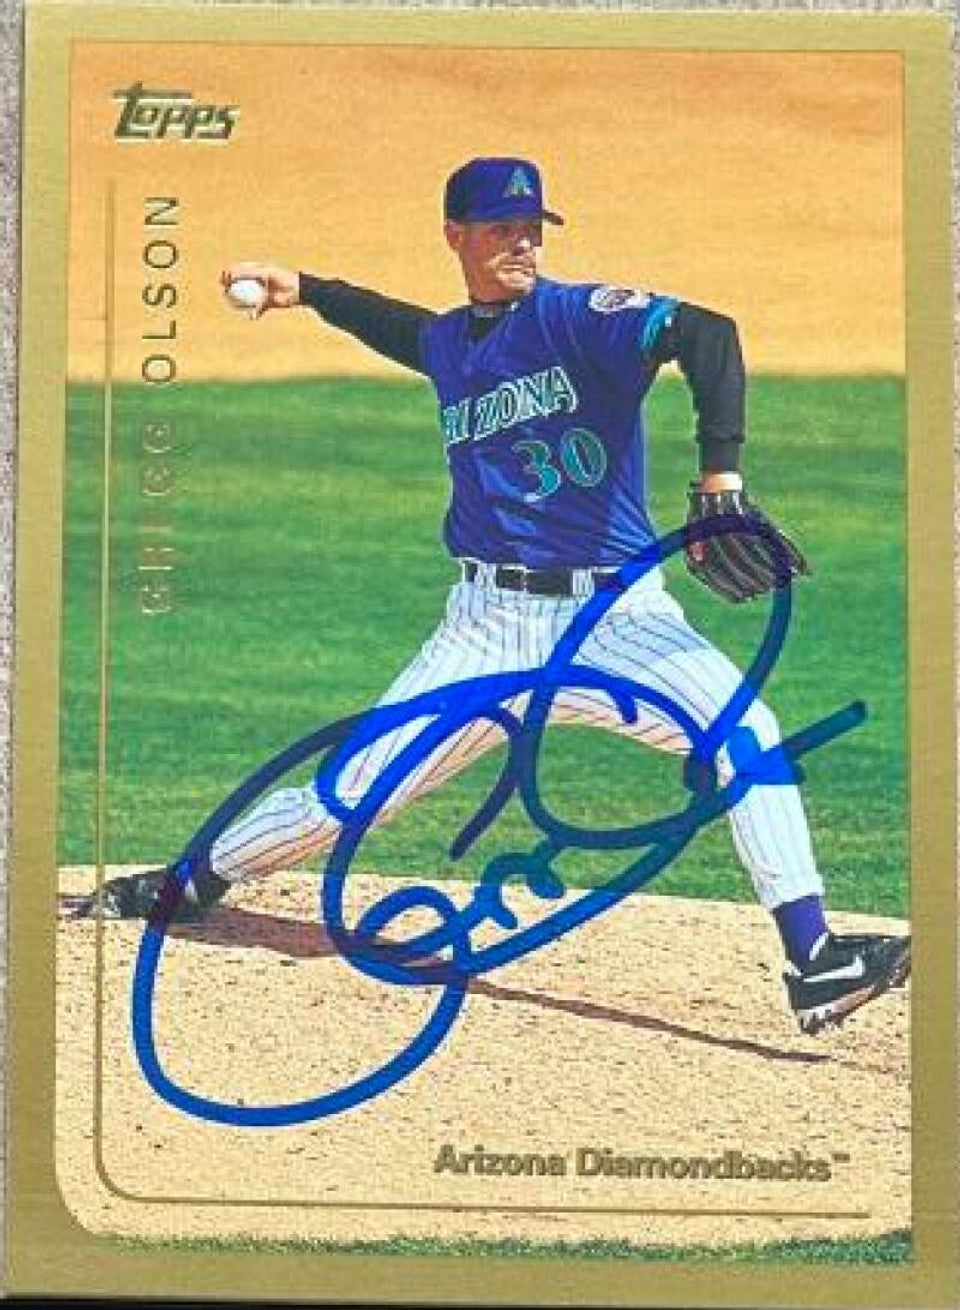 Gregg Olson Signed 1999 Topps Baseball Card - Arizona Diamondbacks